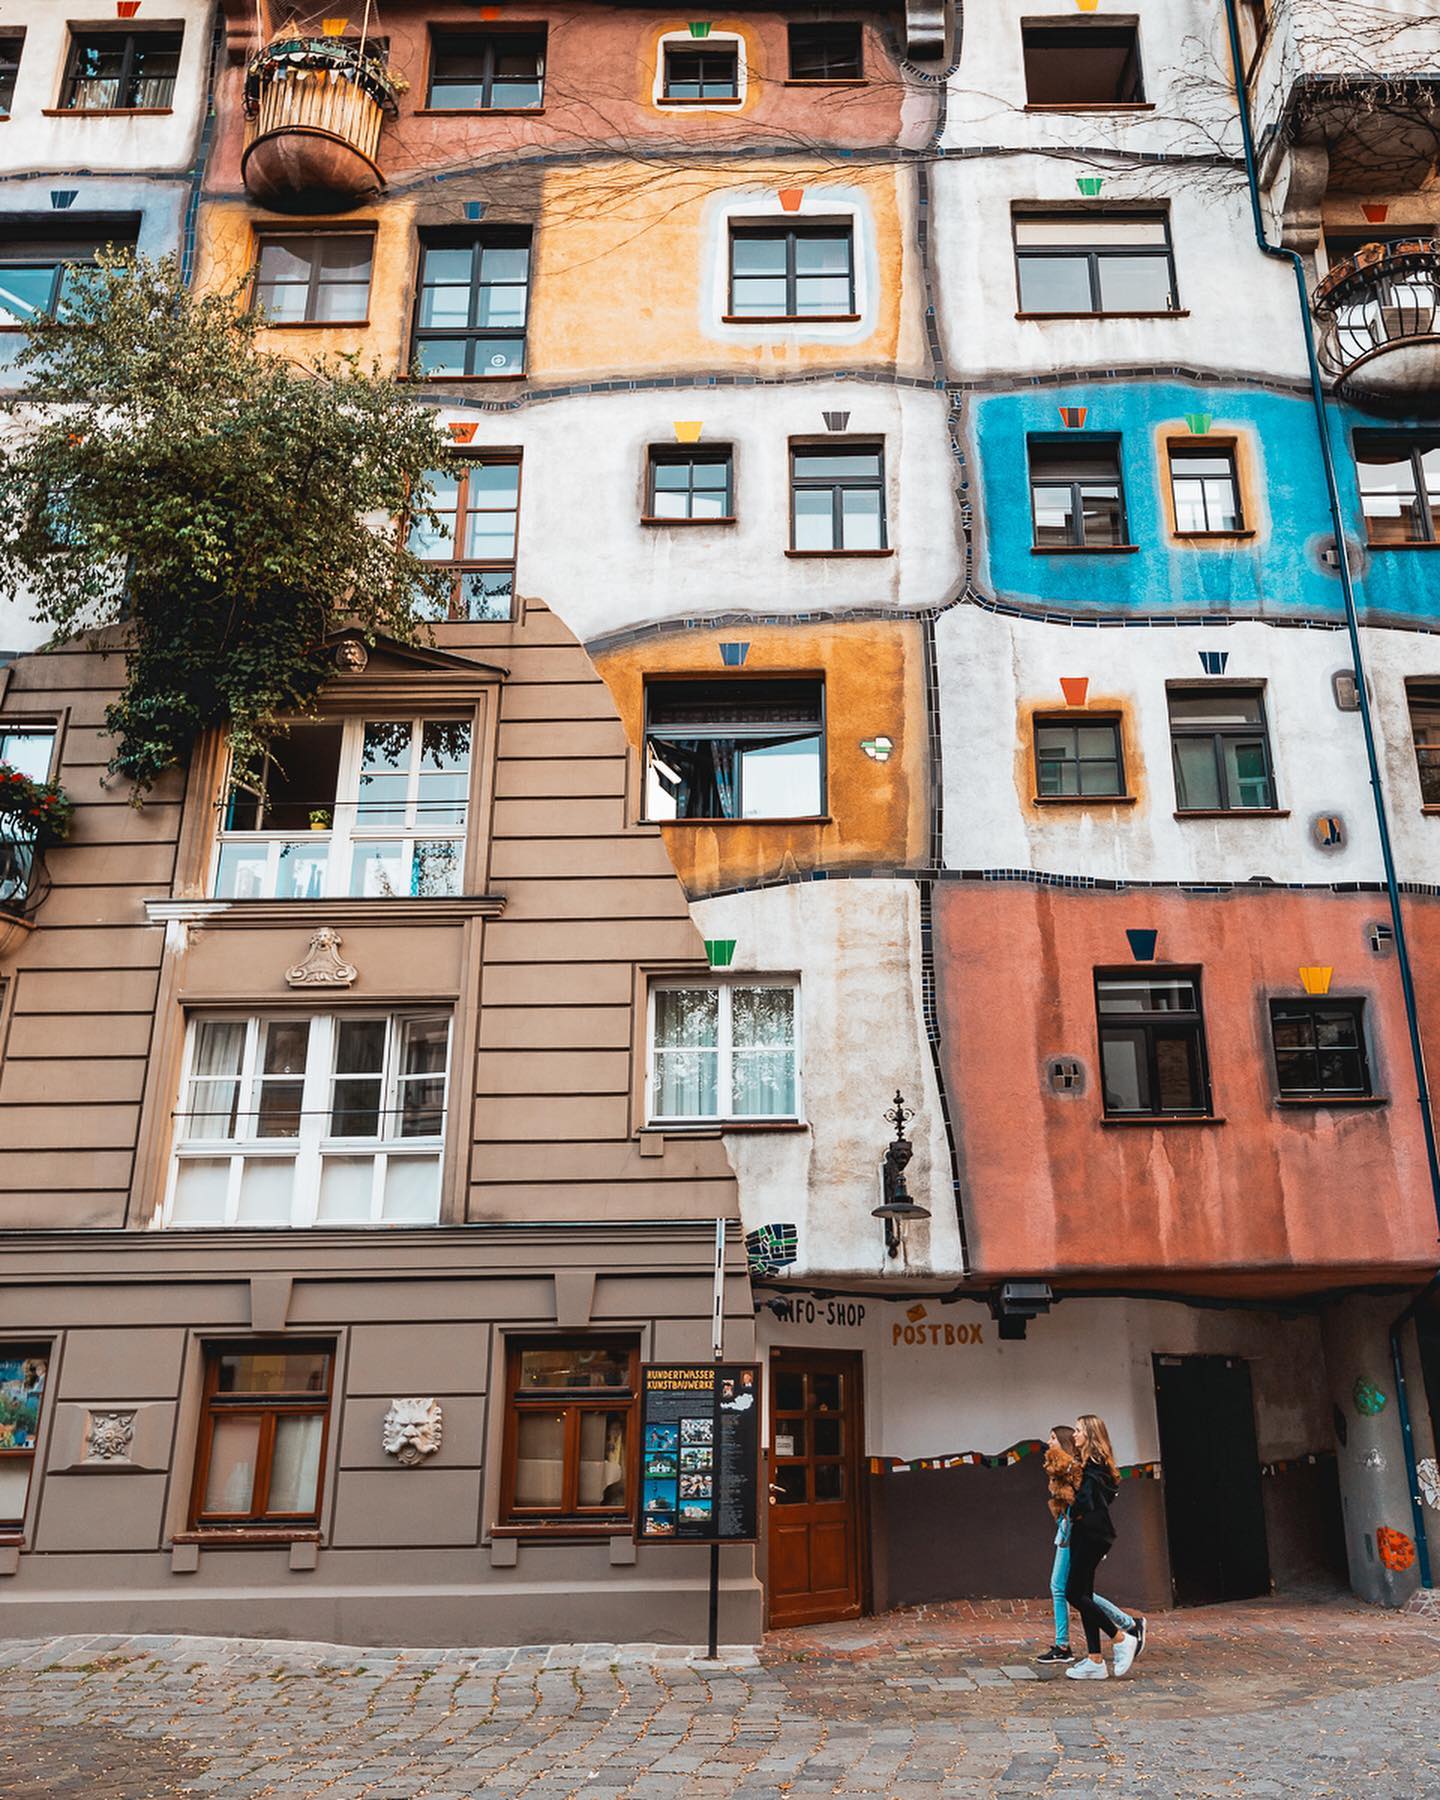 Hundertwasserhaus Vienna Instagram Spot